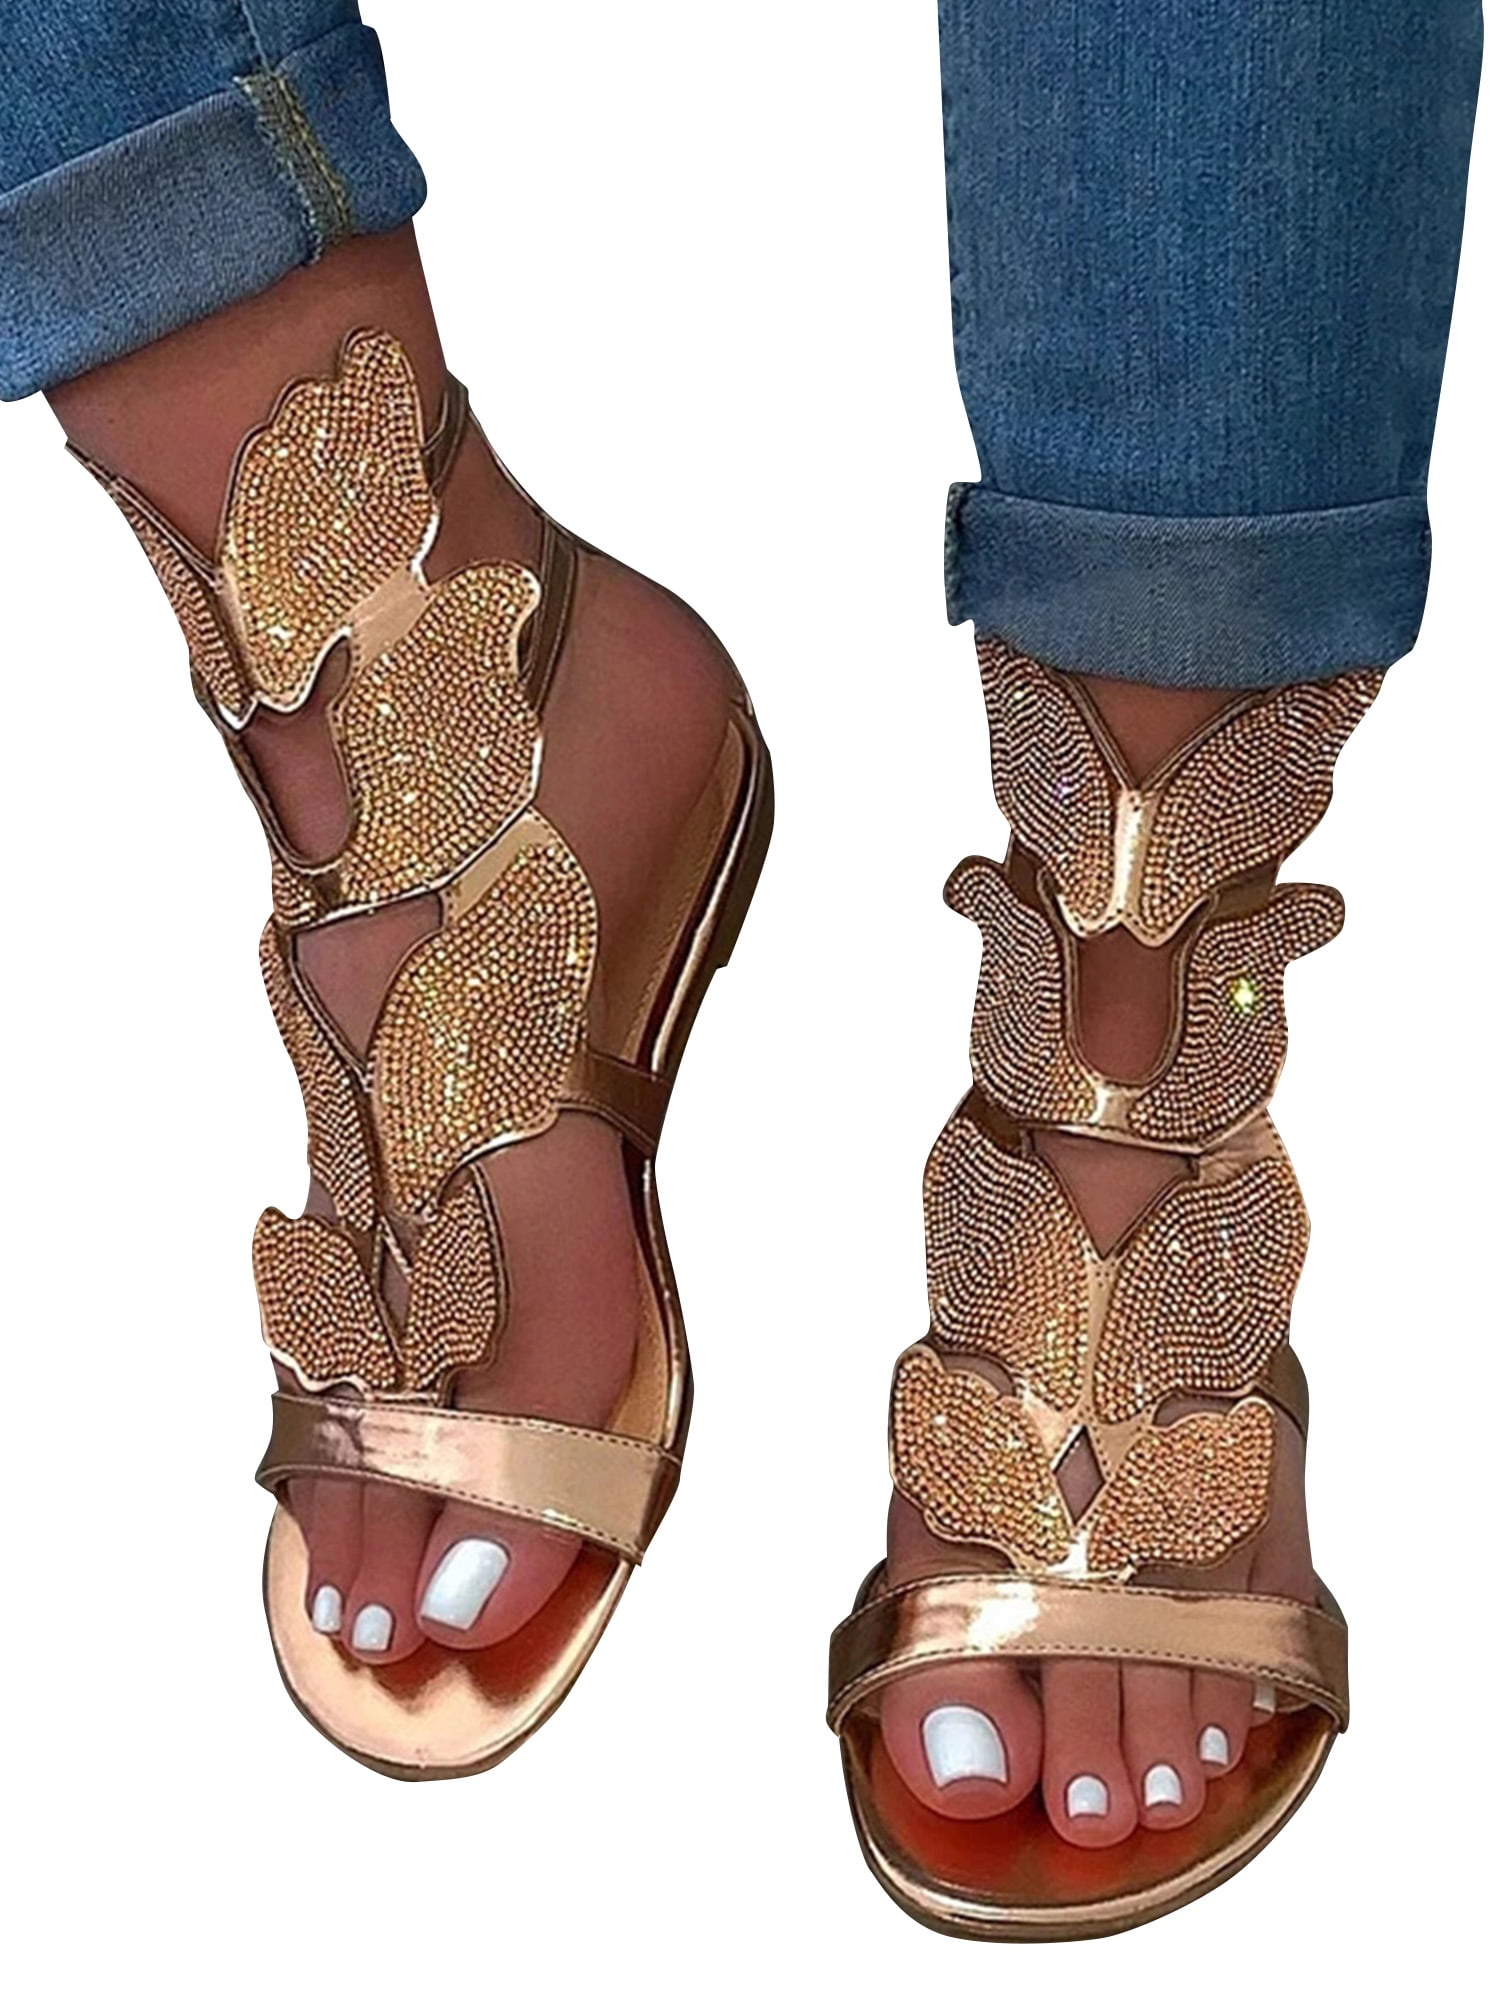 Ladies Diamante Sandals Womens Slip On Toe Post Shoes Party Wedding Fashion New 